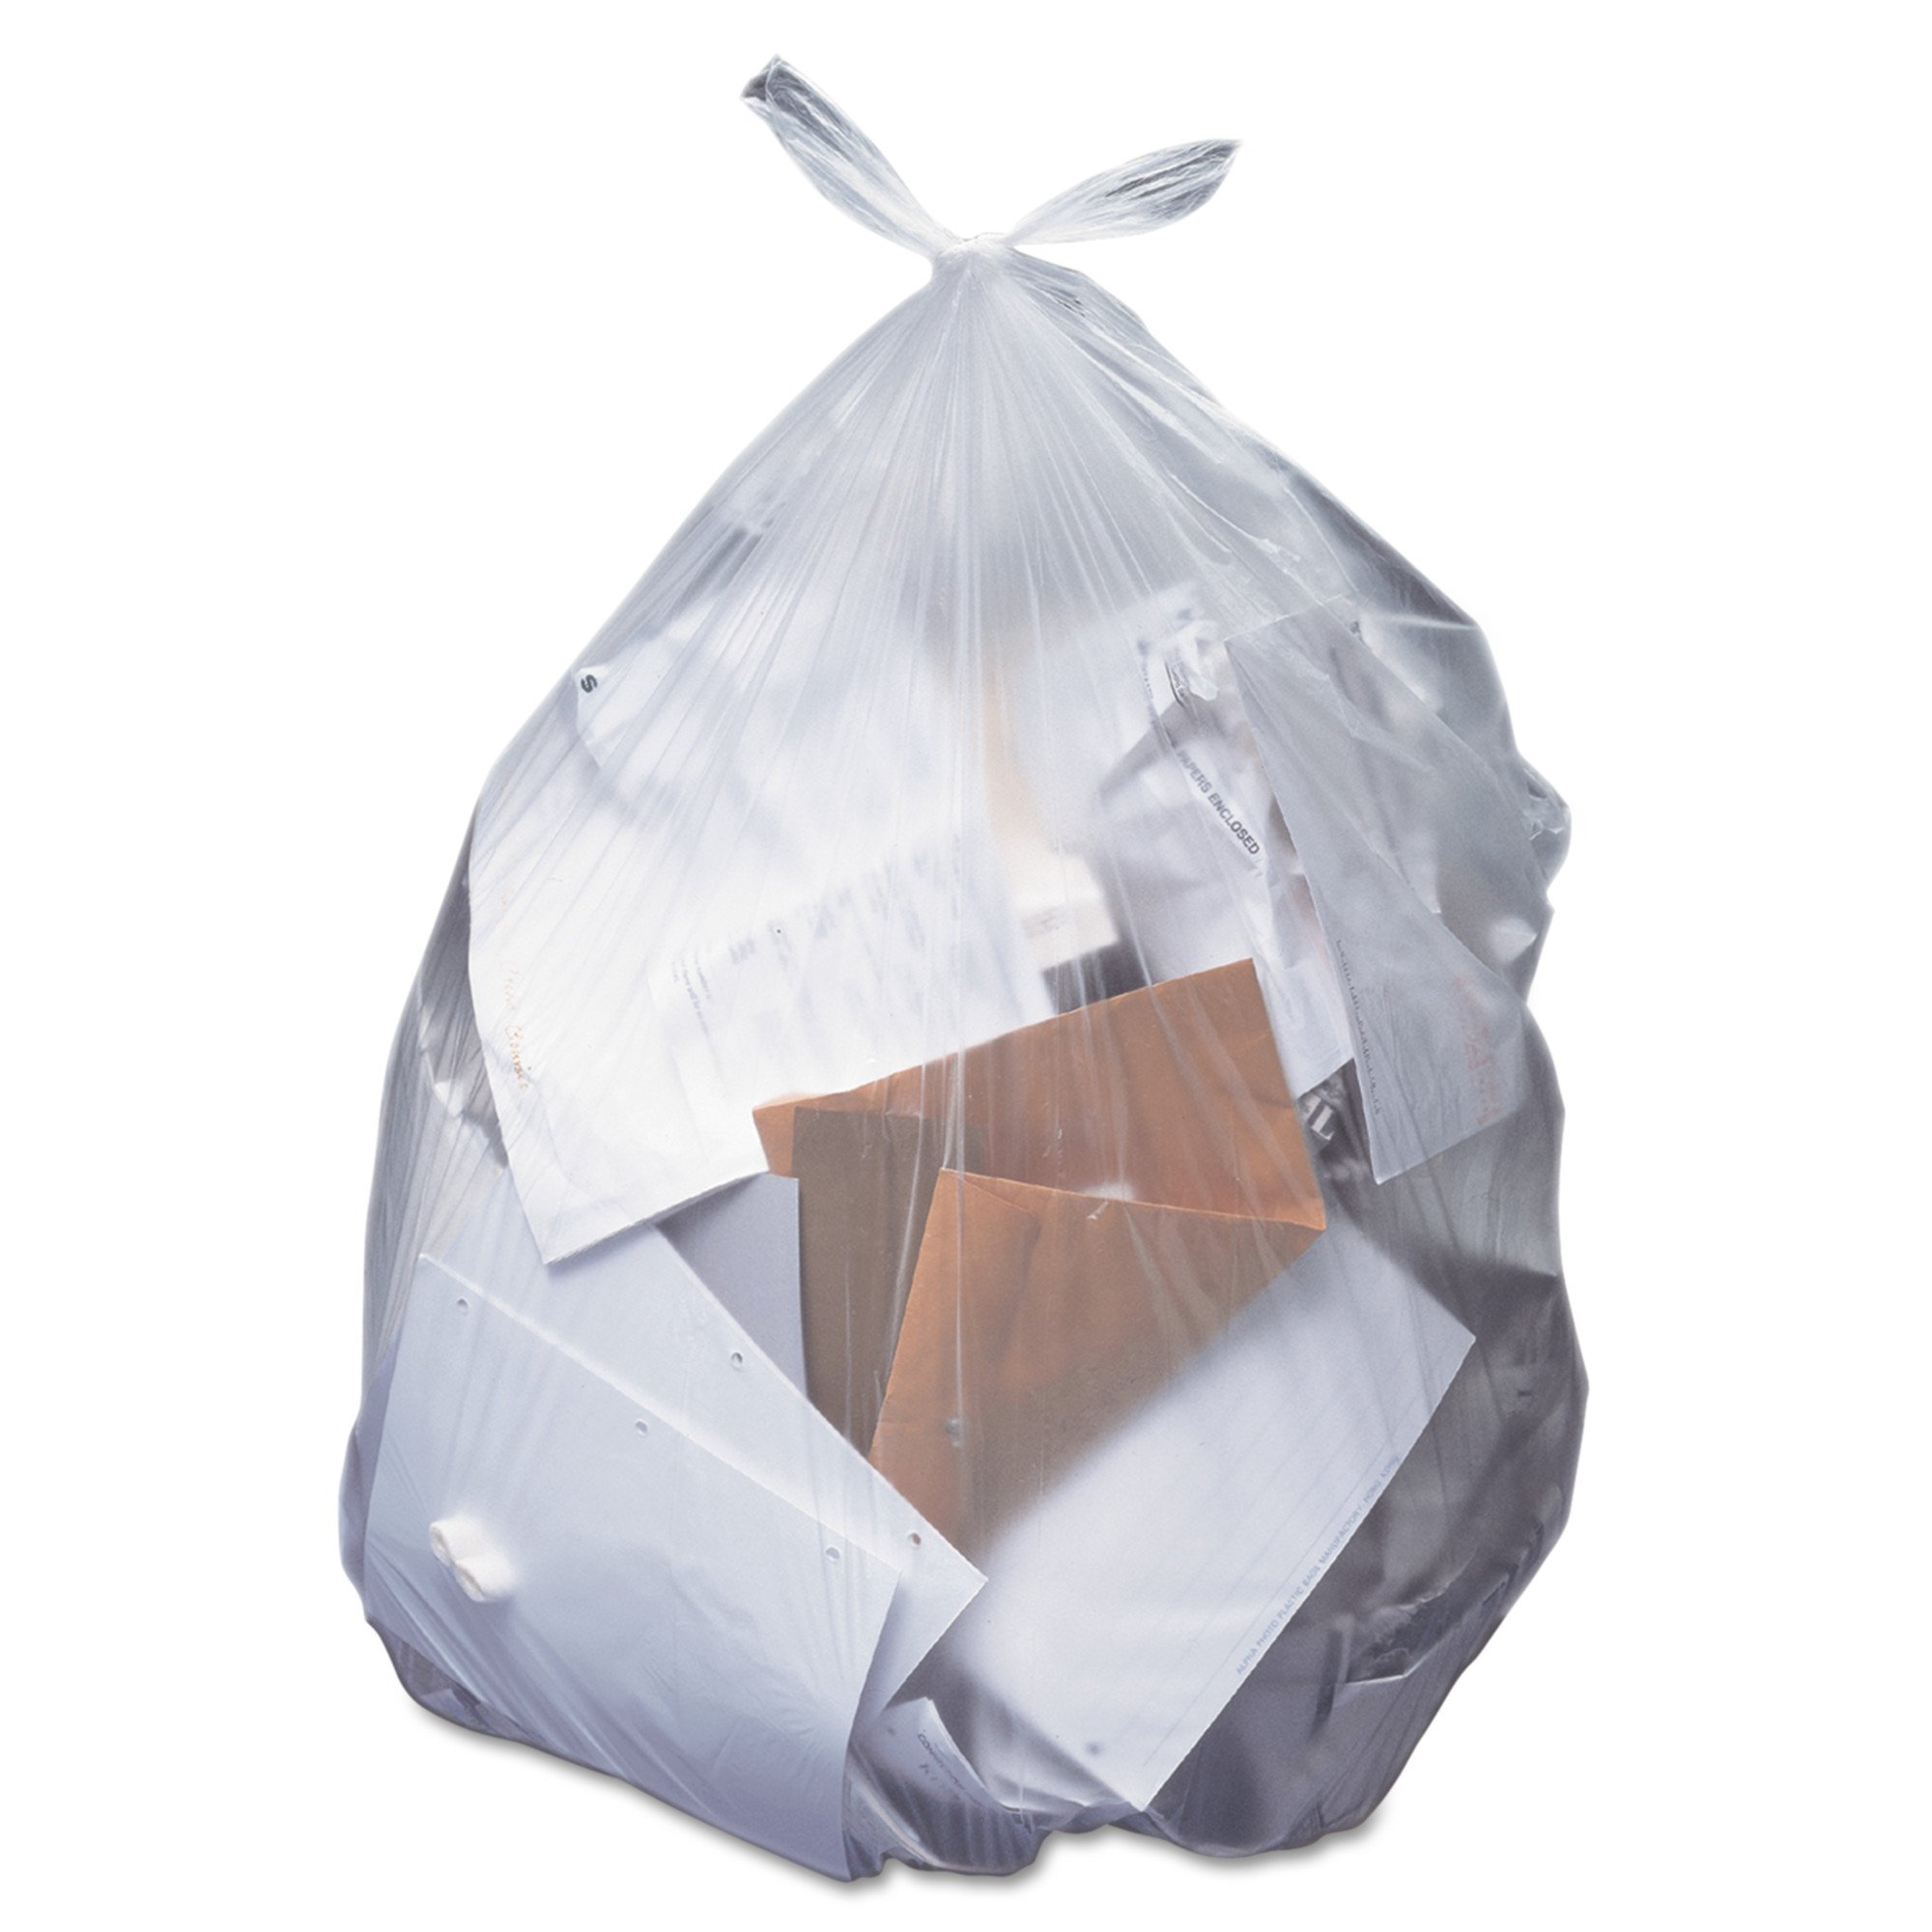 20-30 Gallon Black Regular Duty Trash Bags - 0.65 Mil